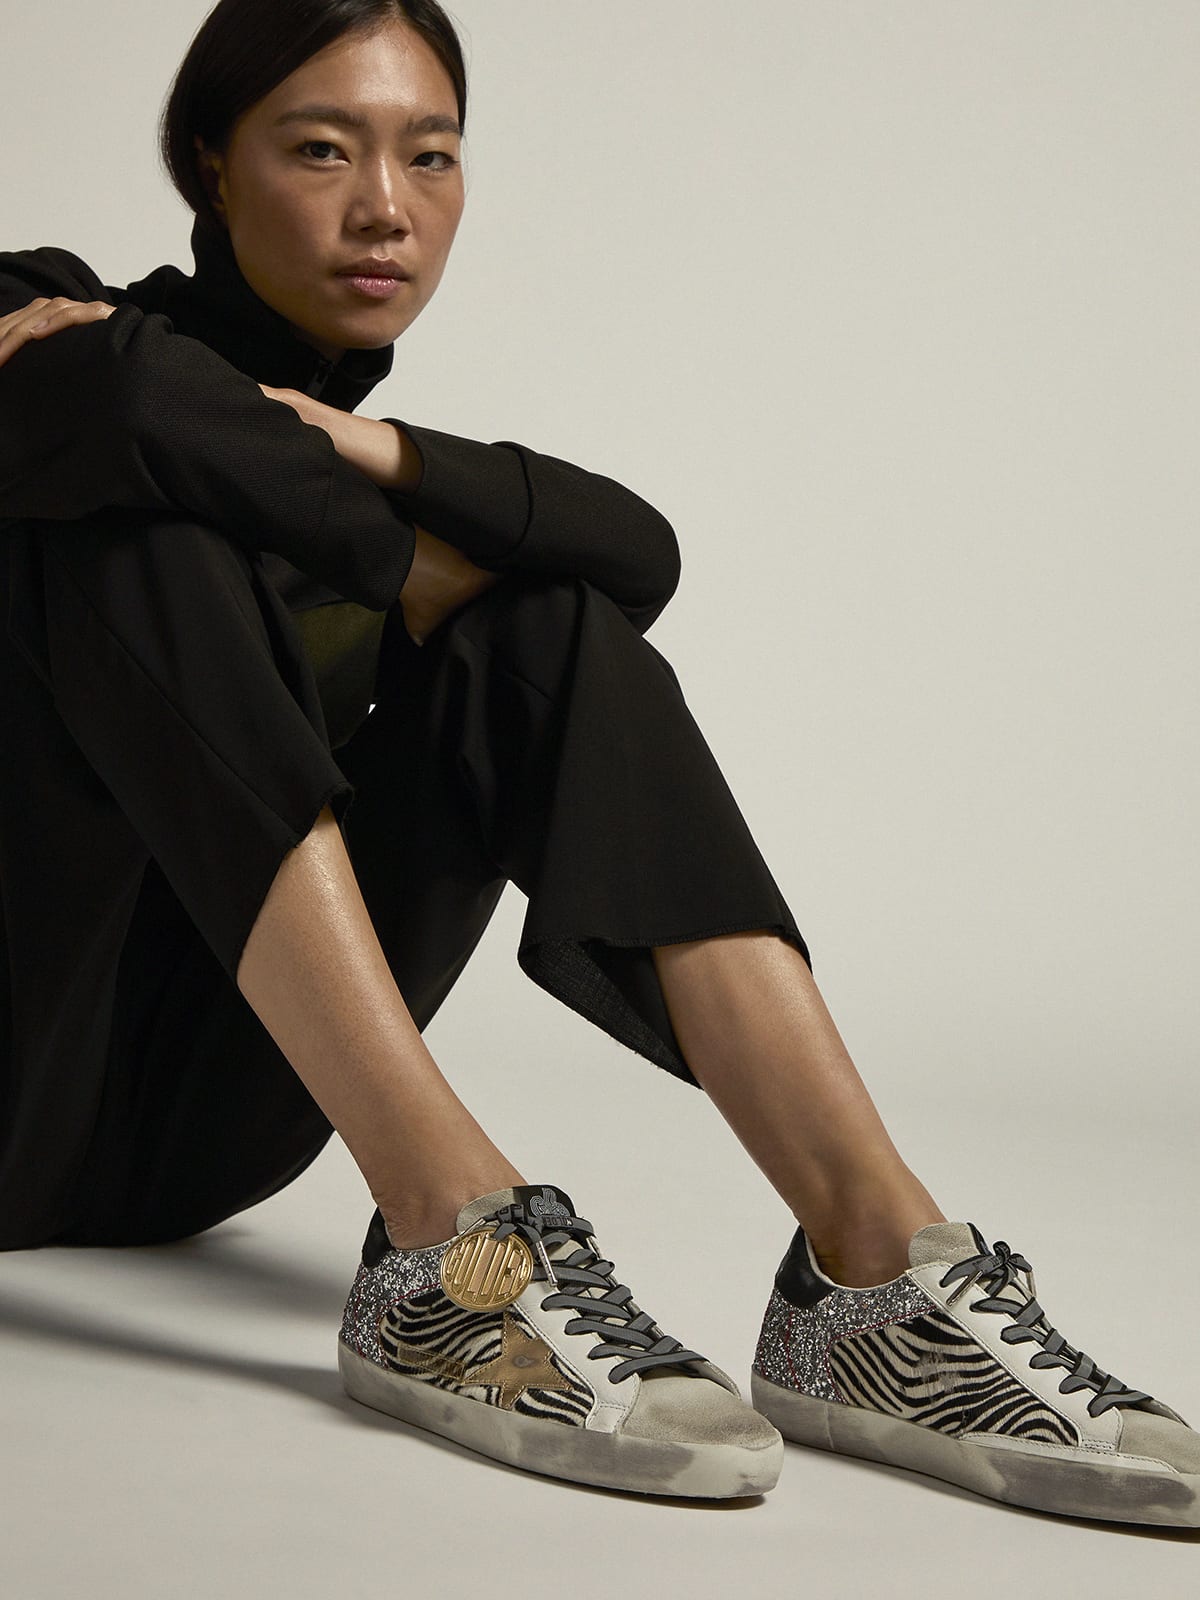 Women\'s Super-Star sneakers in zebra-print pony skin | Golden Goose